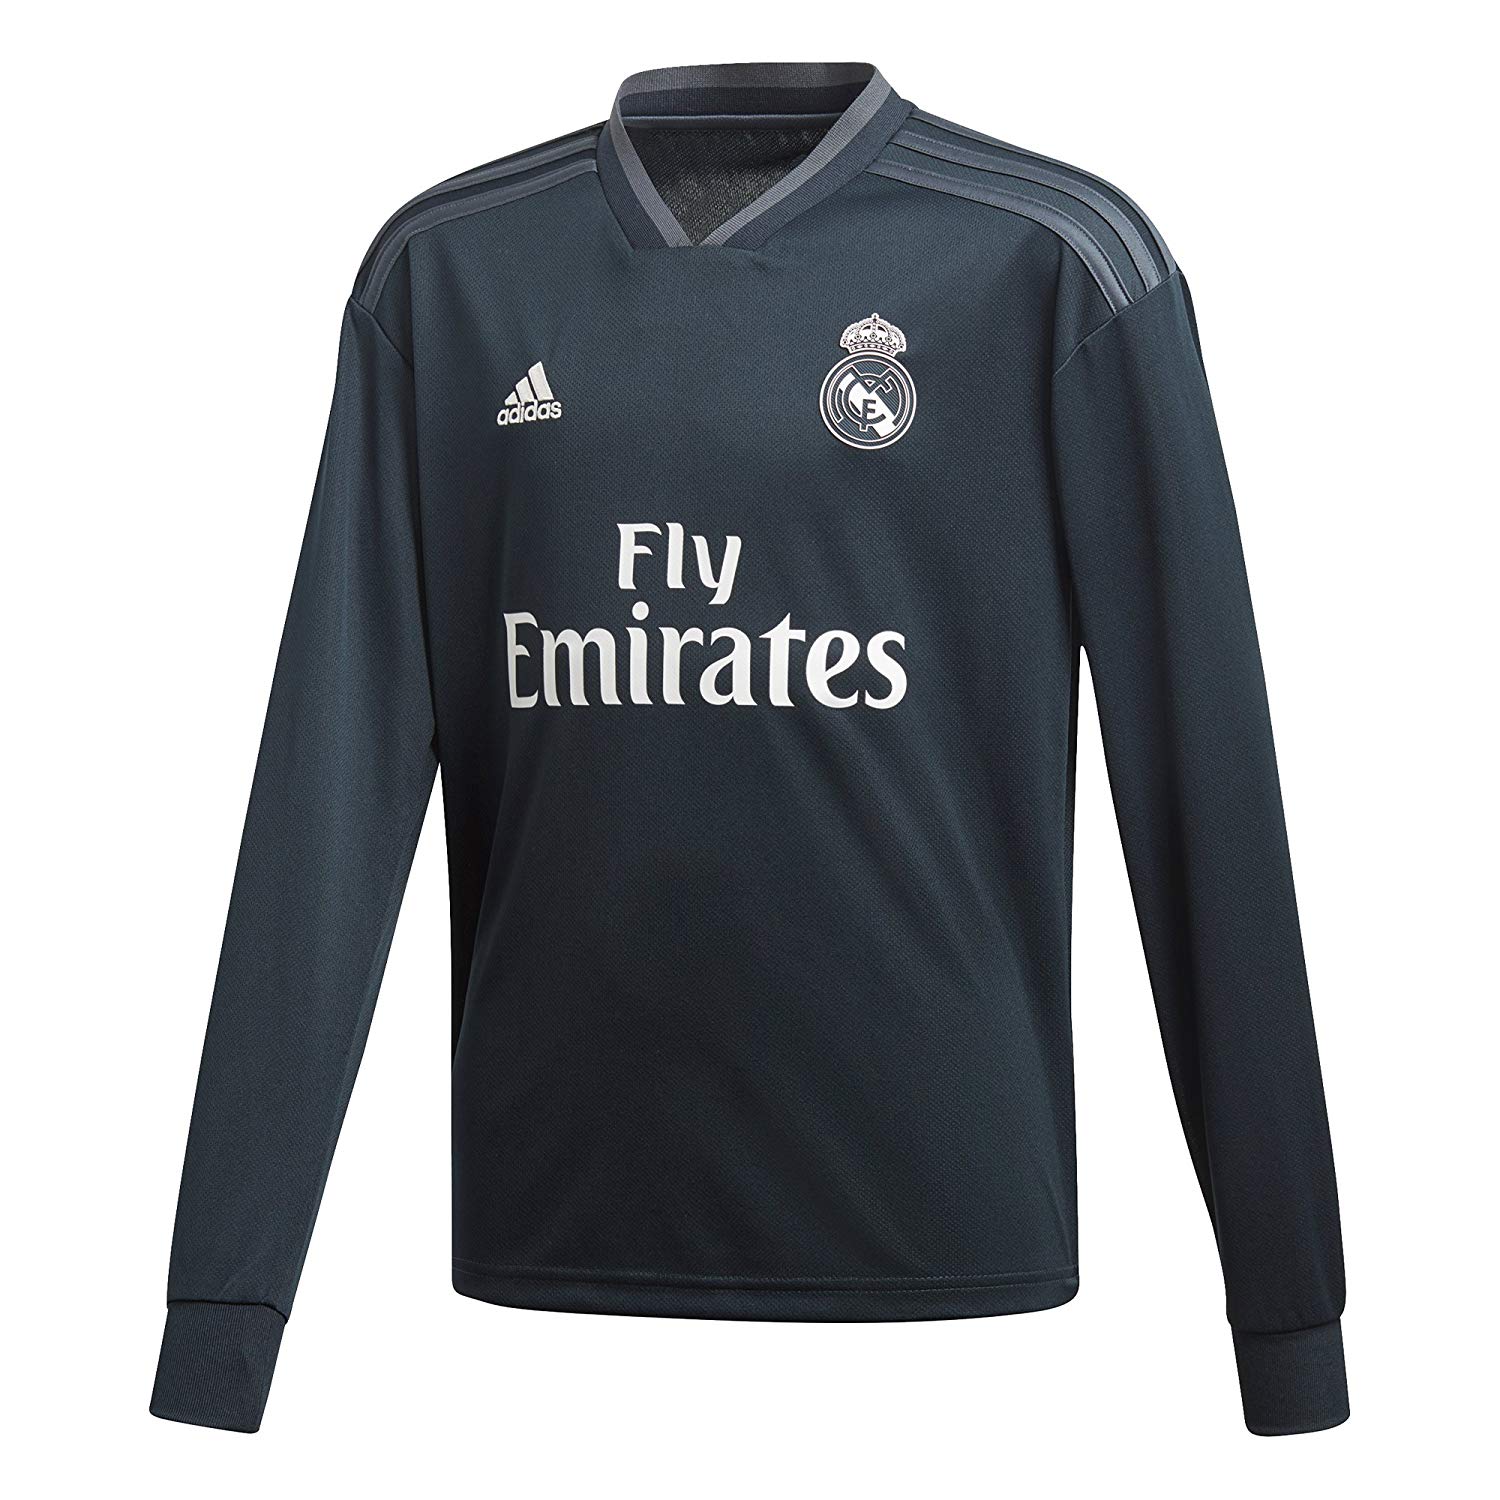 Adidas Real Madrid 2018 Logo - Amazon.com : adidas 2018-2019 Real Madrid Away Long Sleeve Football ...